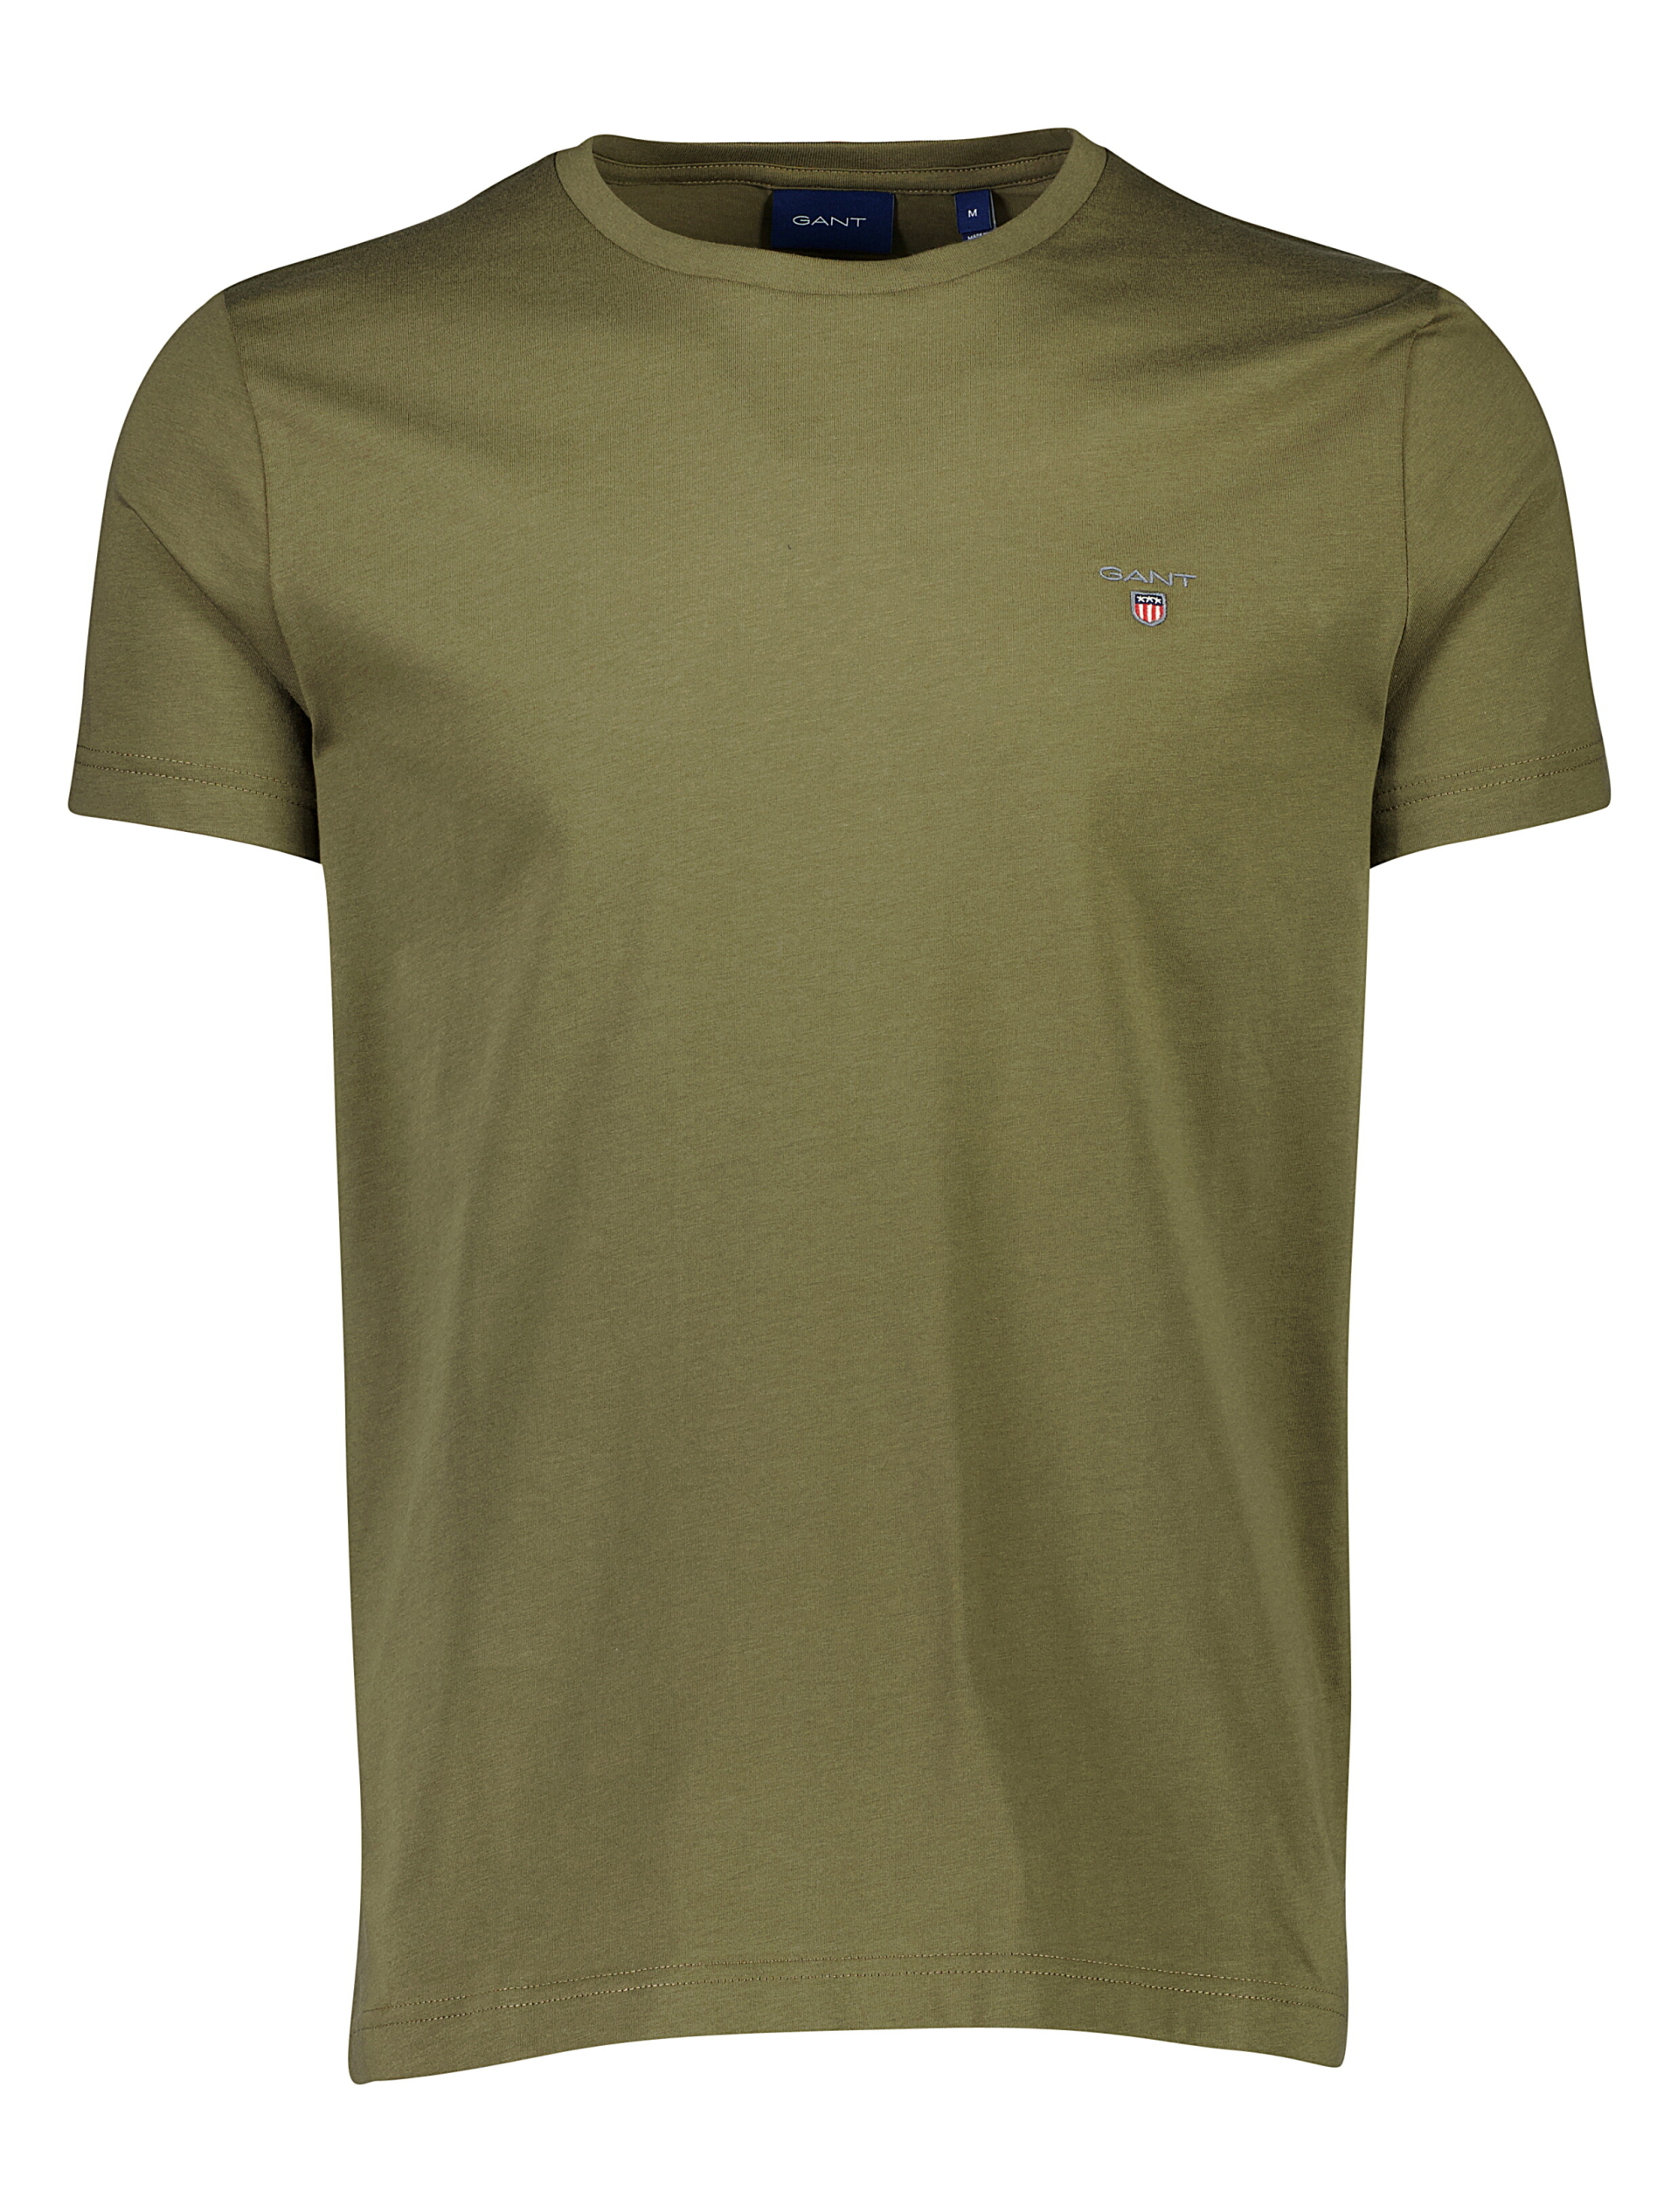 Gant T-shirt grøn / 301 racing green